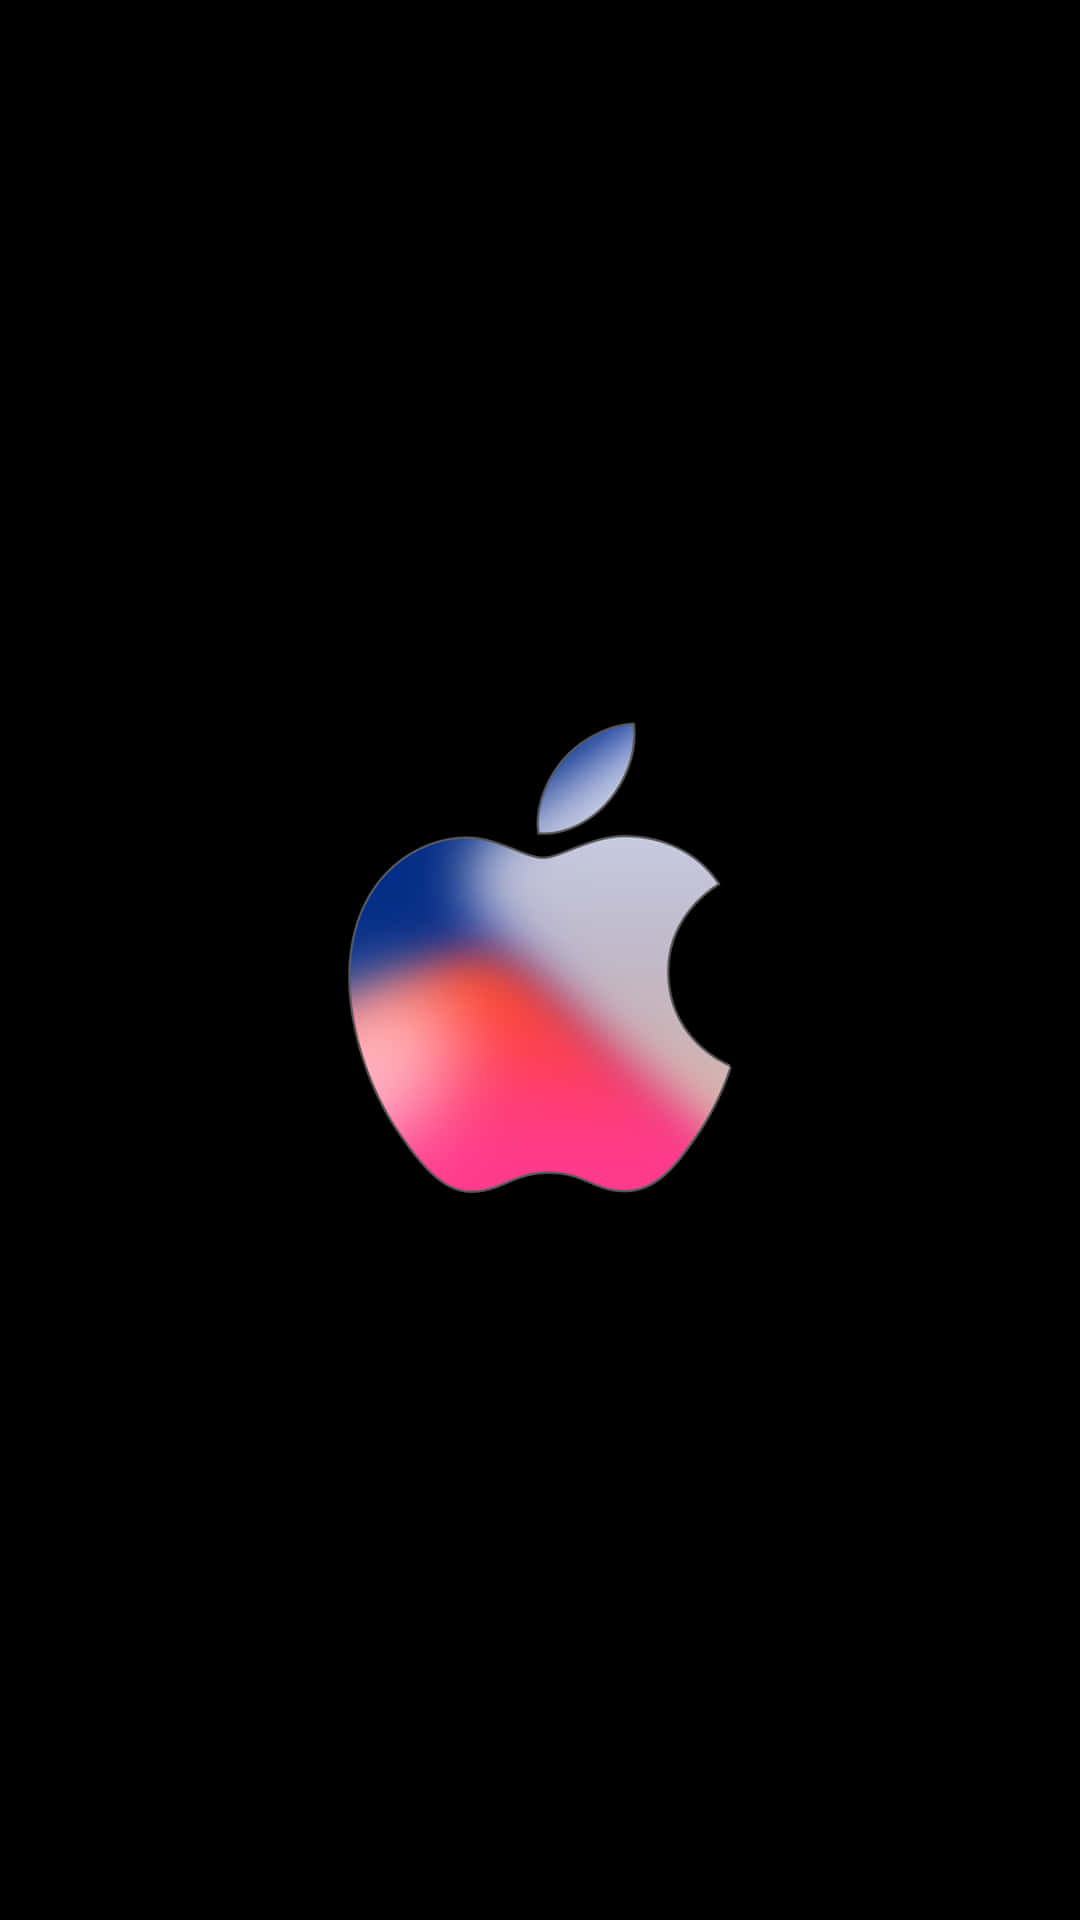 blue and black apple logo